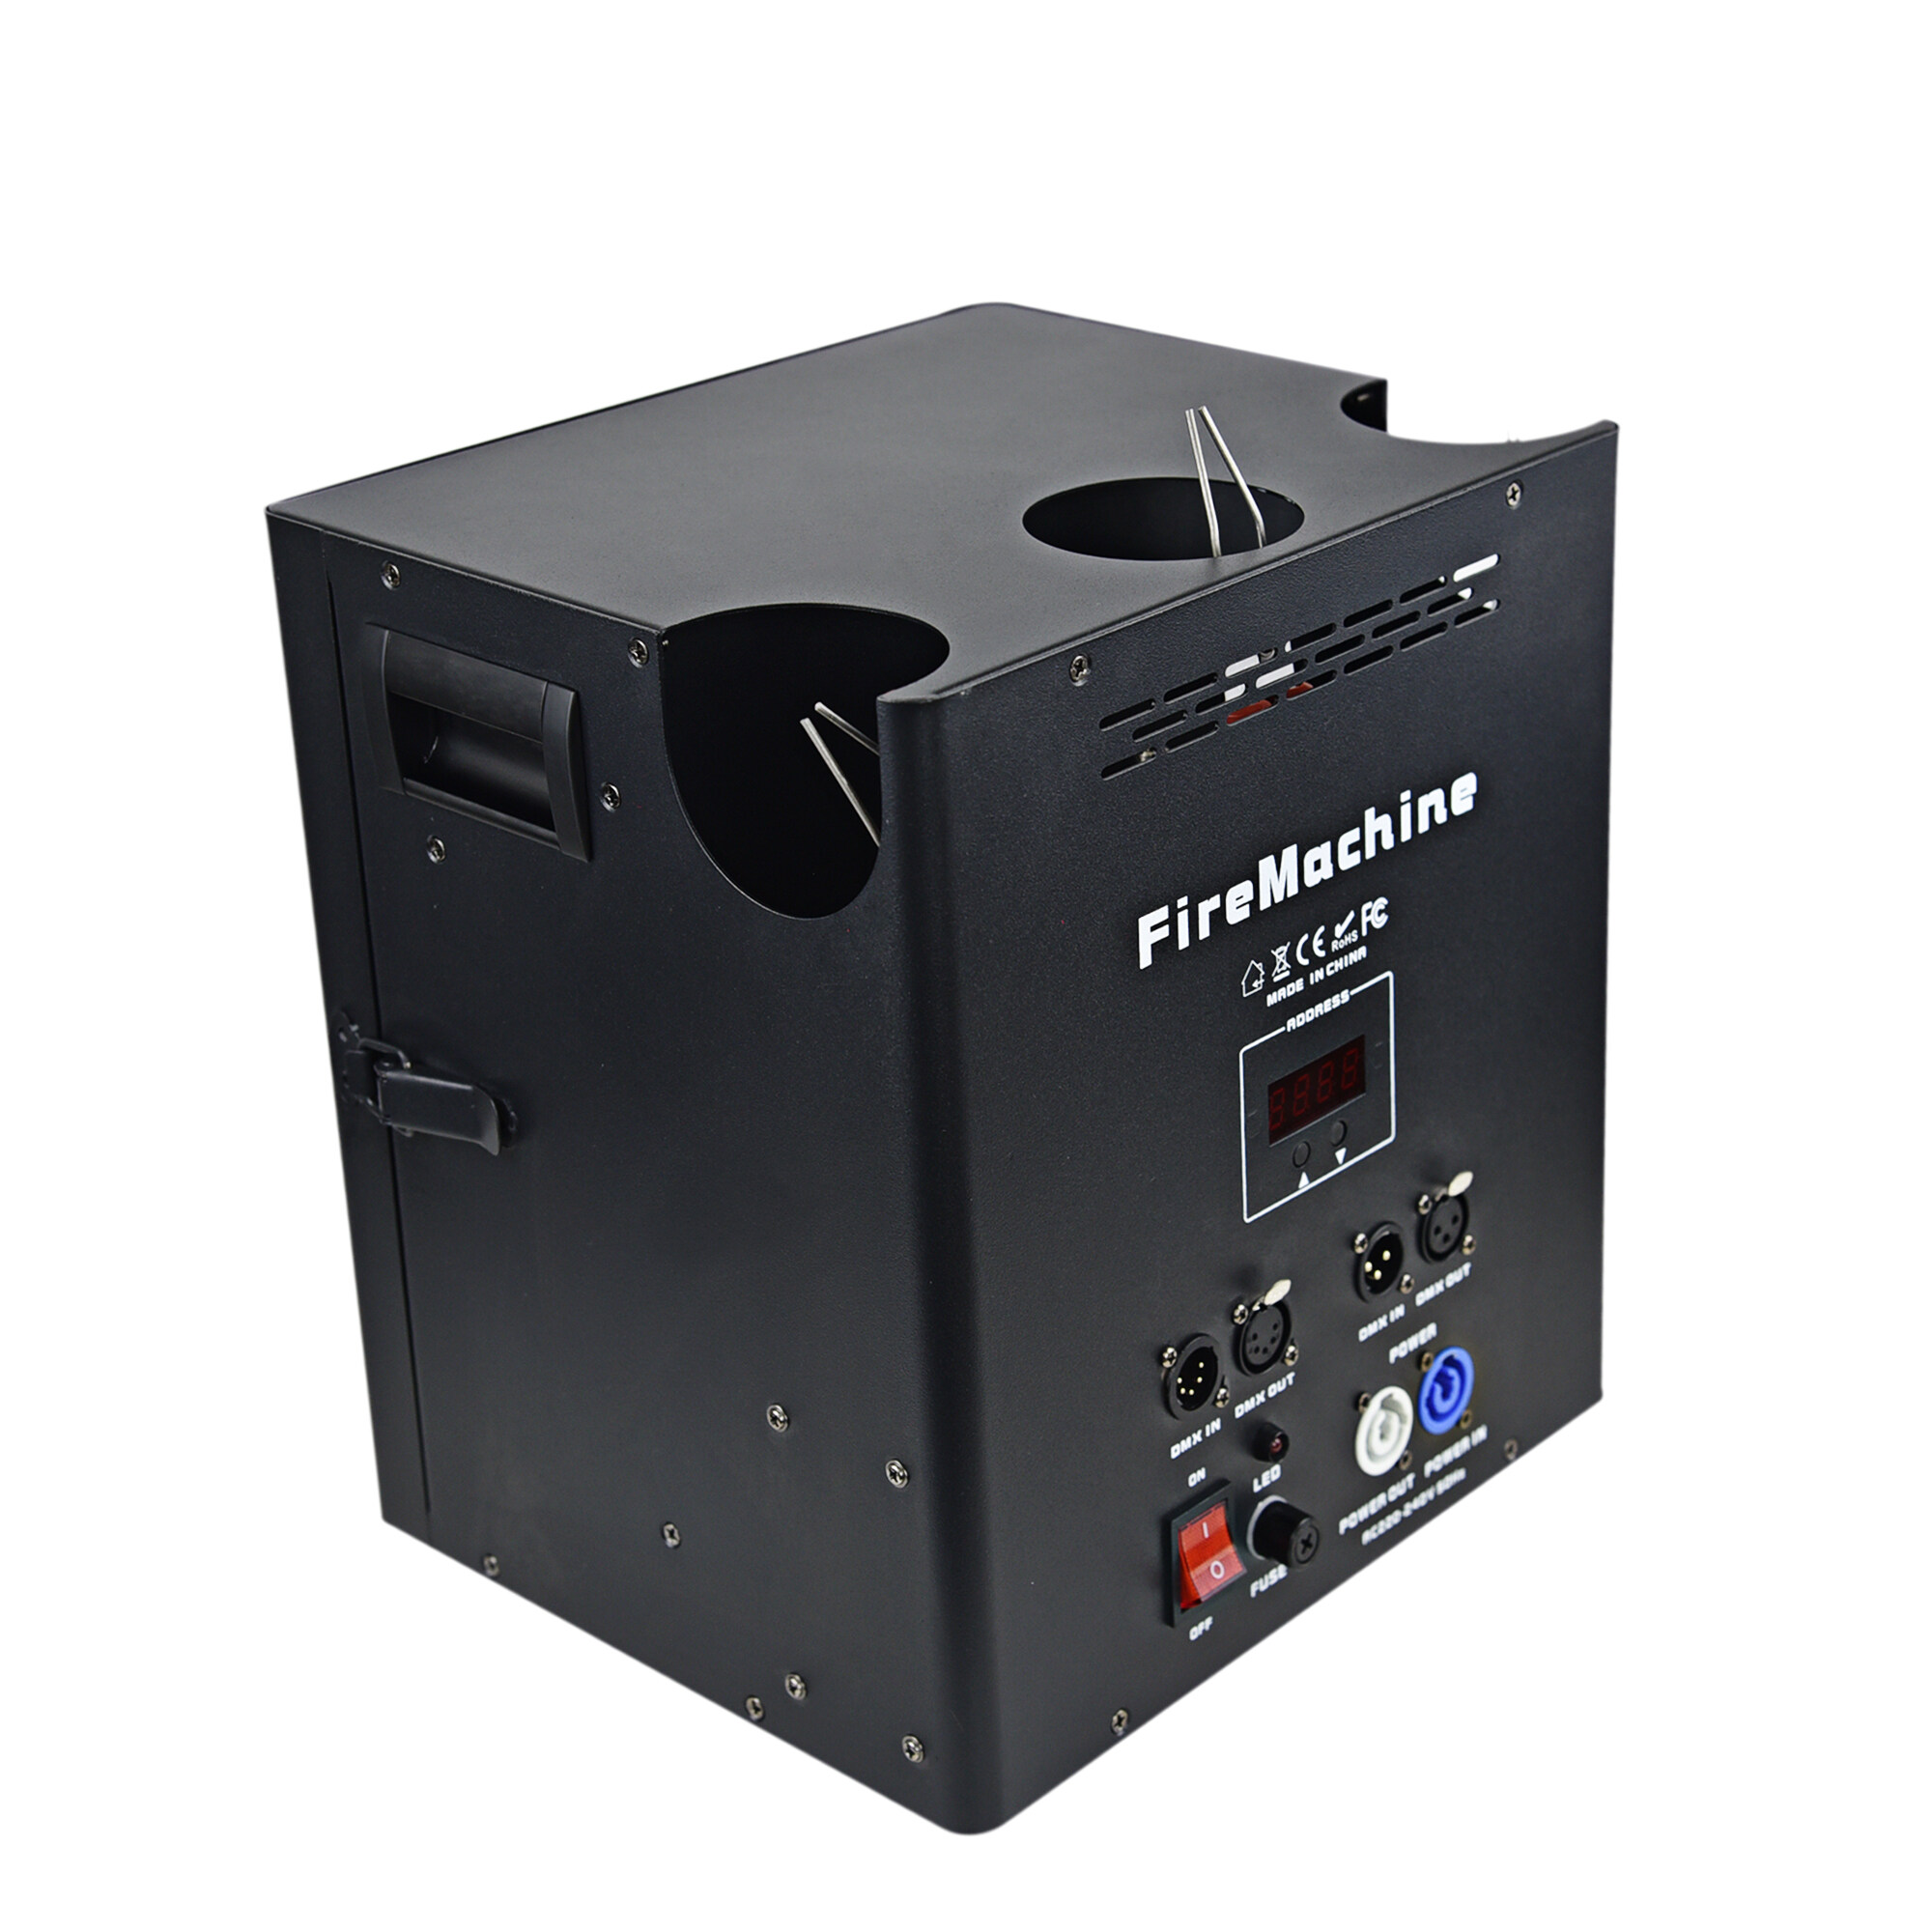 flame machine dmx control, flim flam machine, fake flame machine, cold flame machine, flame machine price